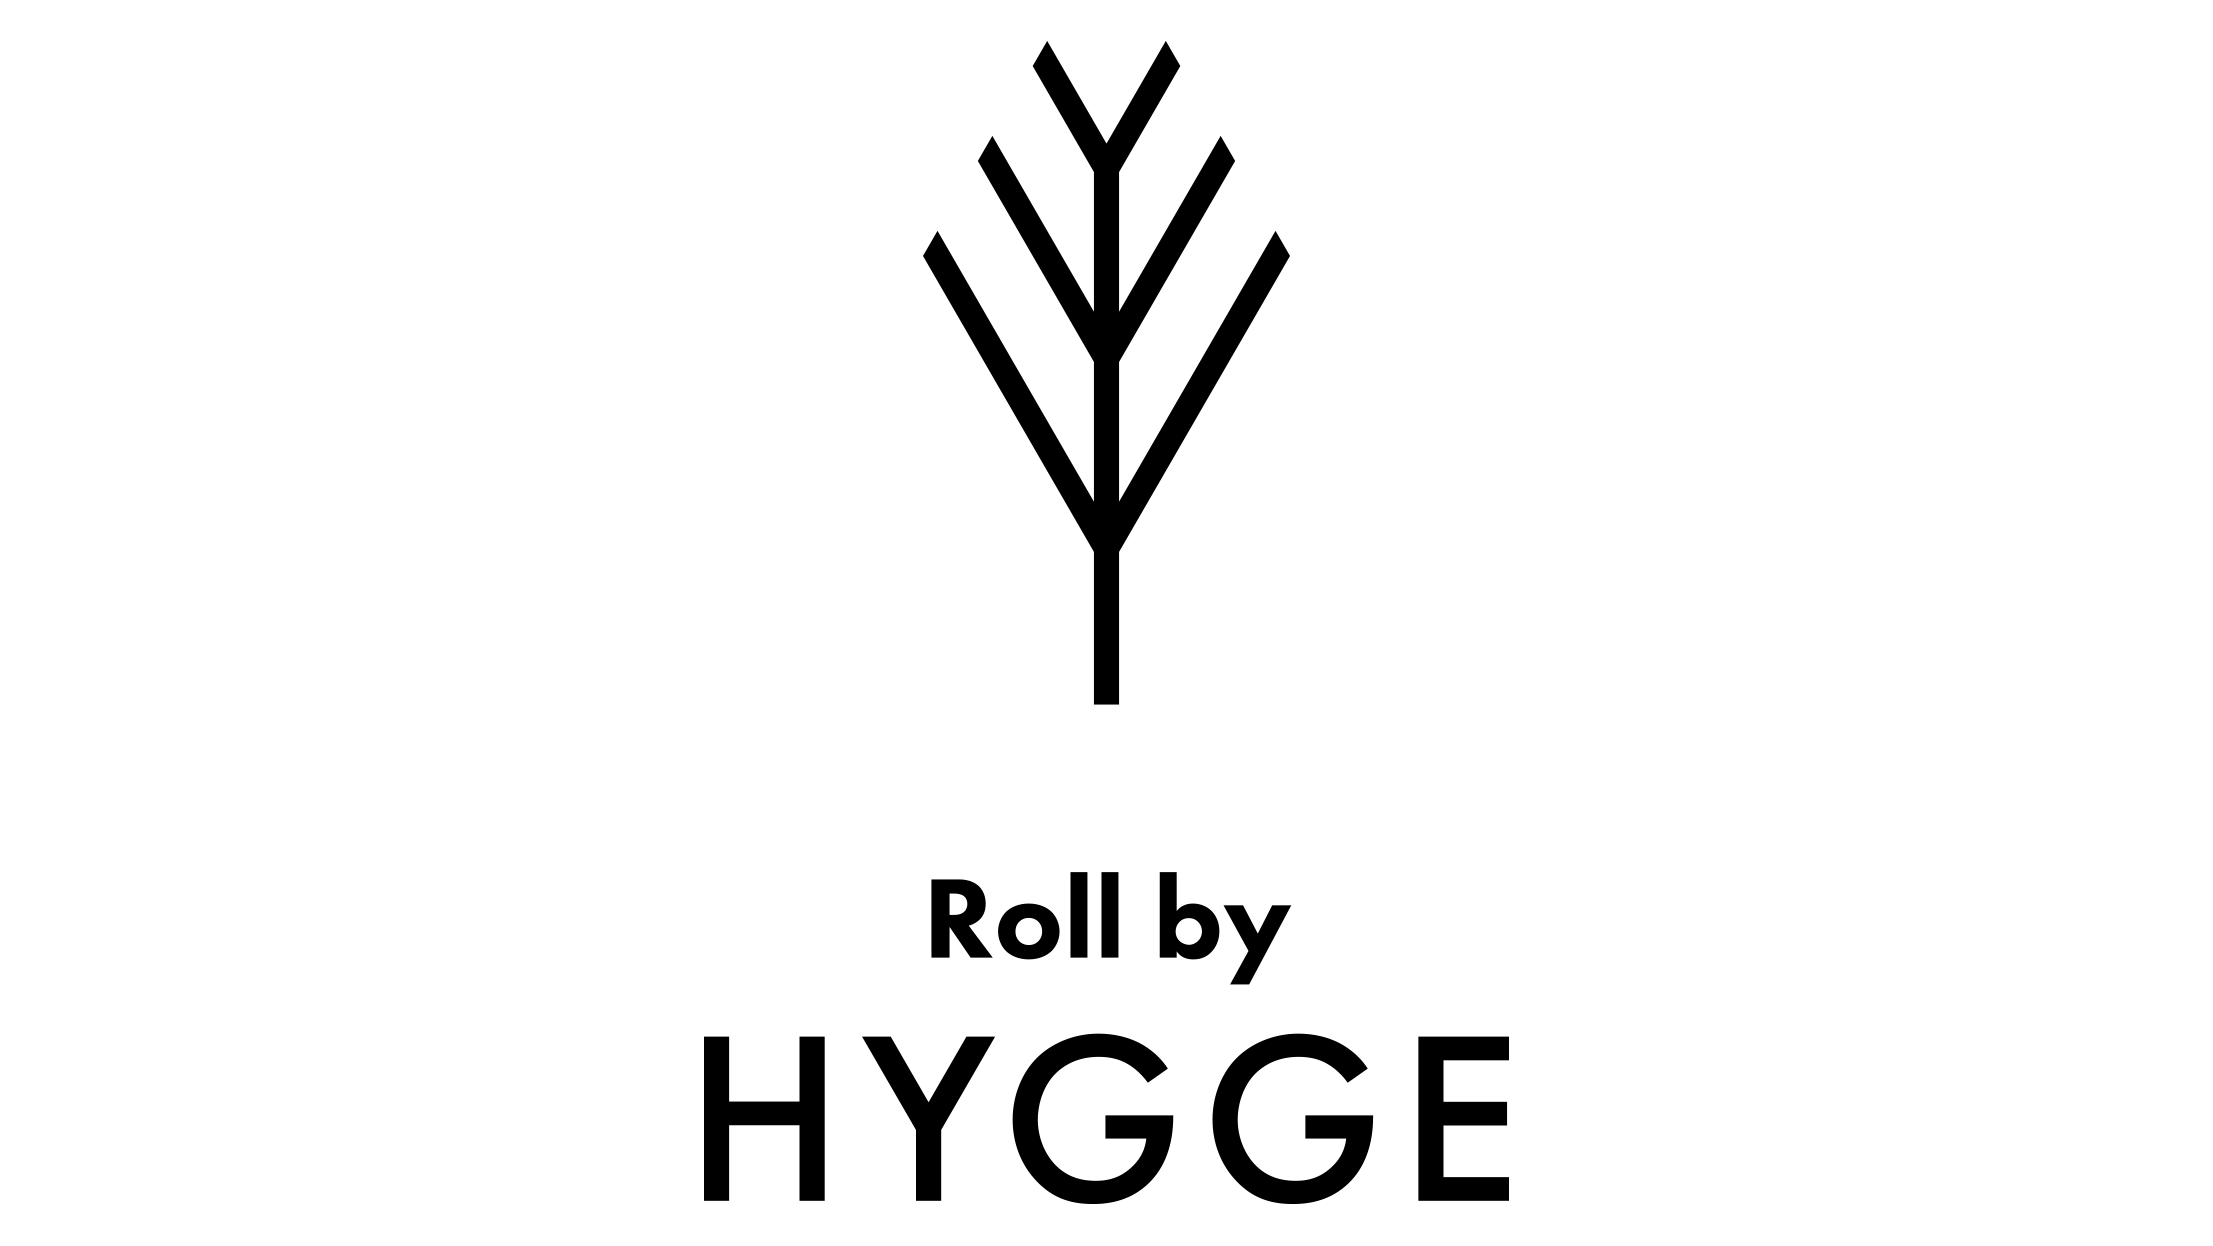 Логотип Hygge